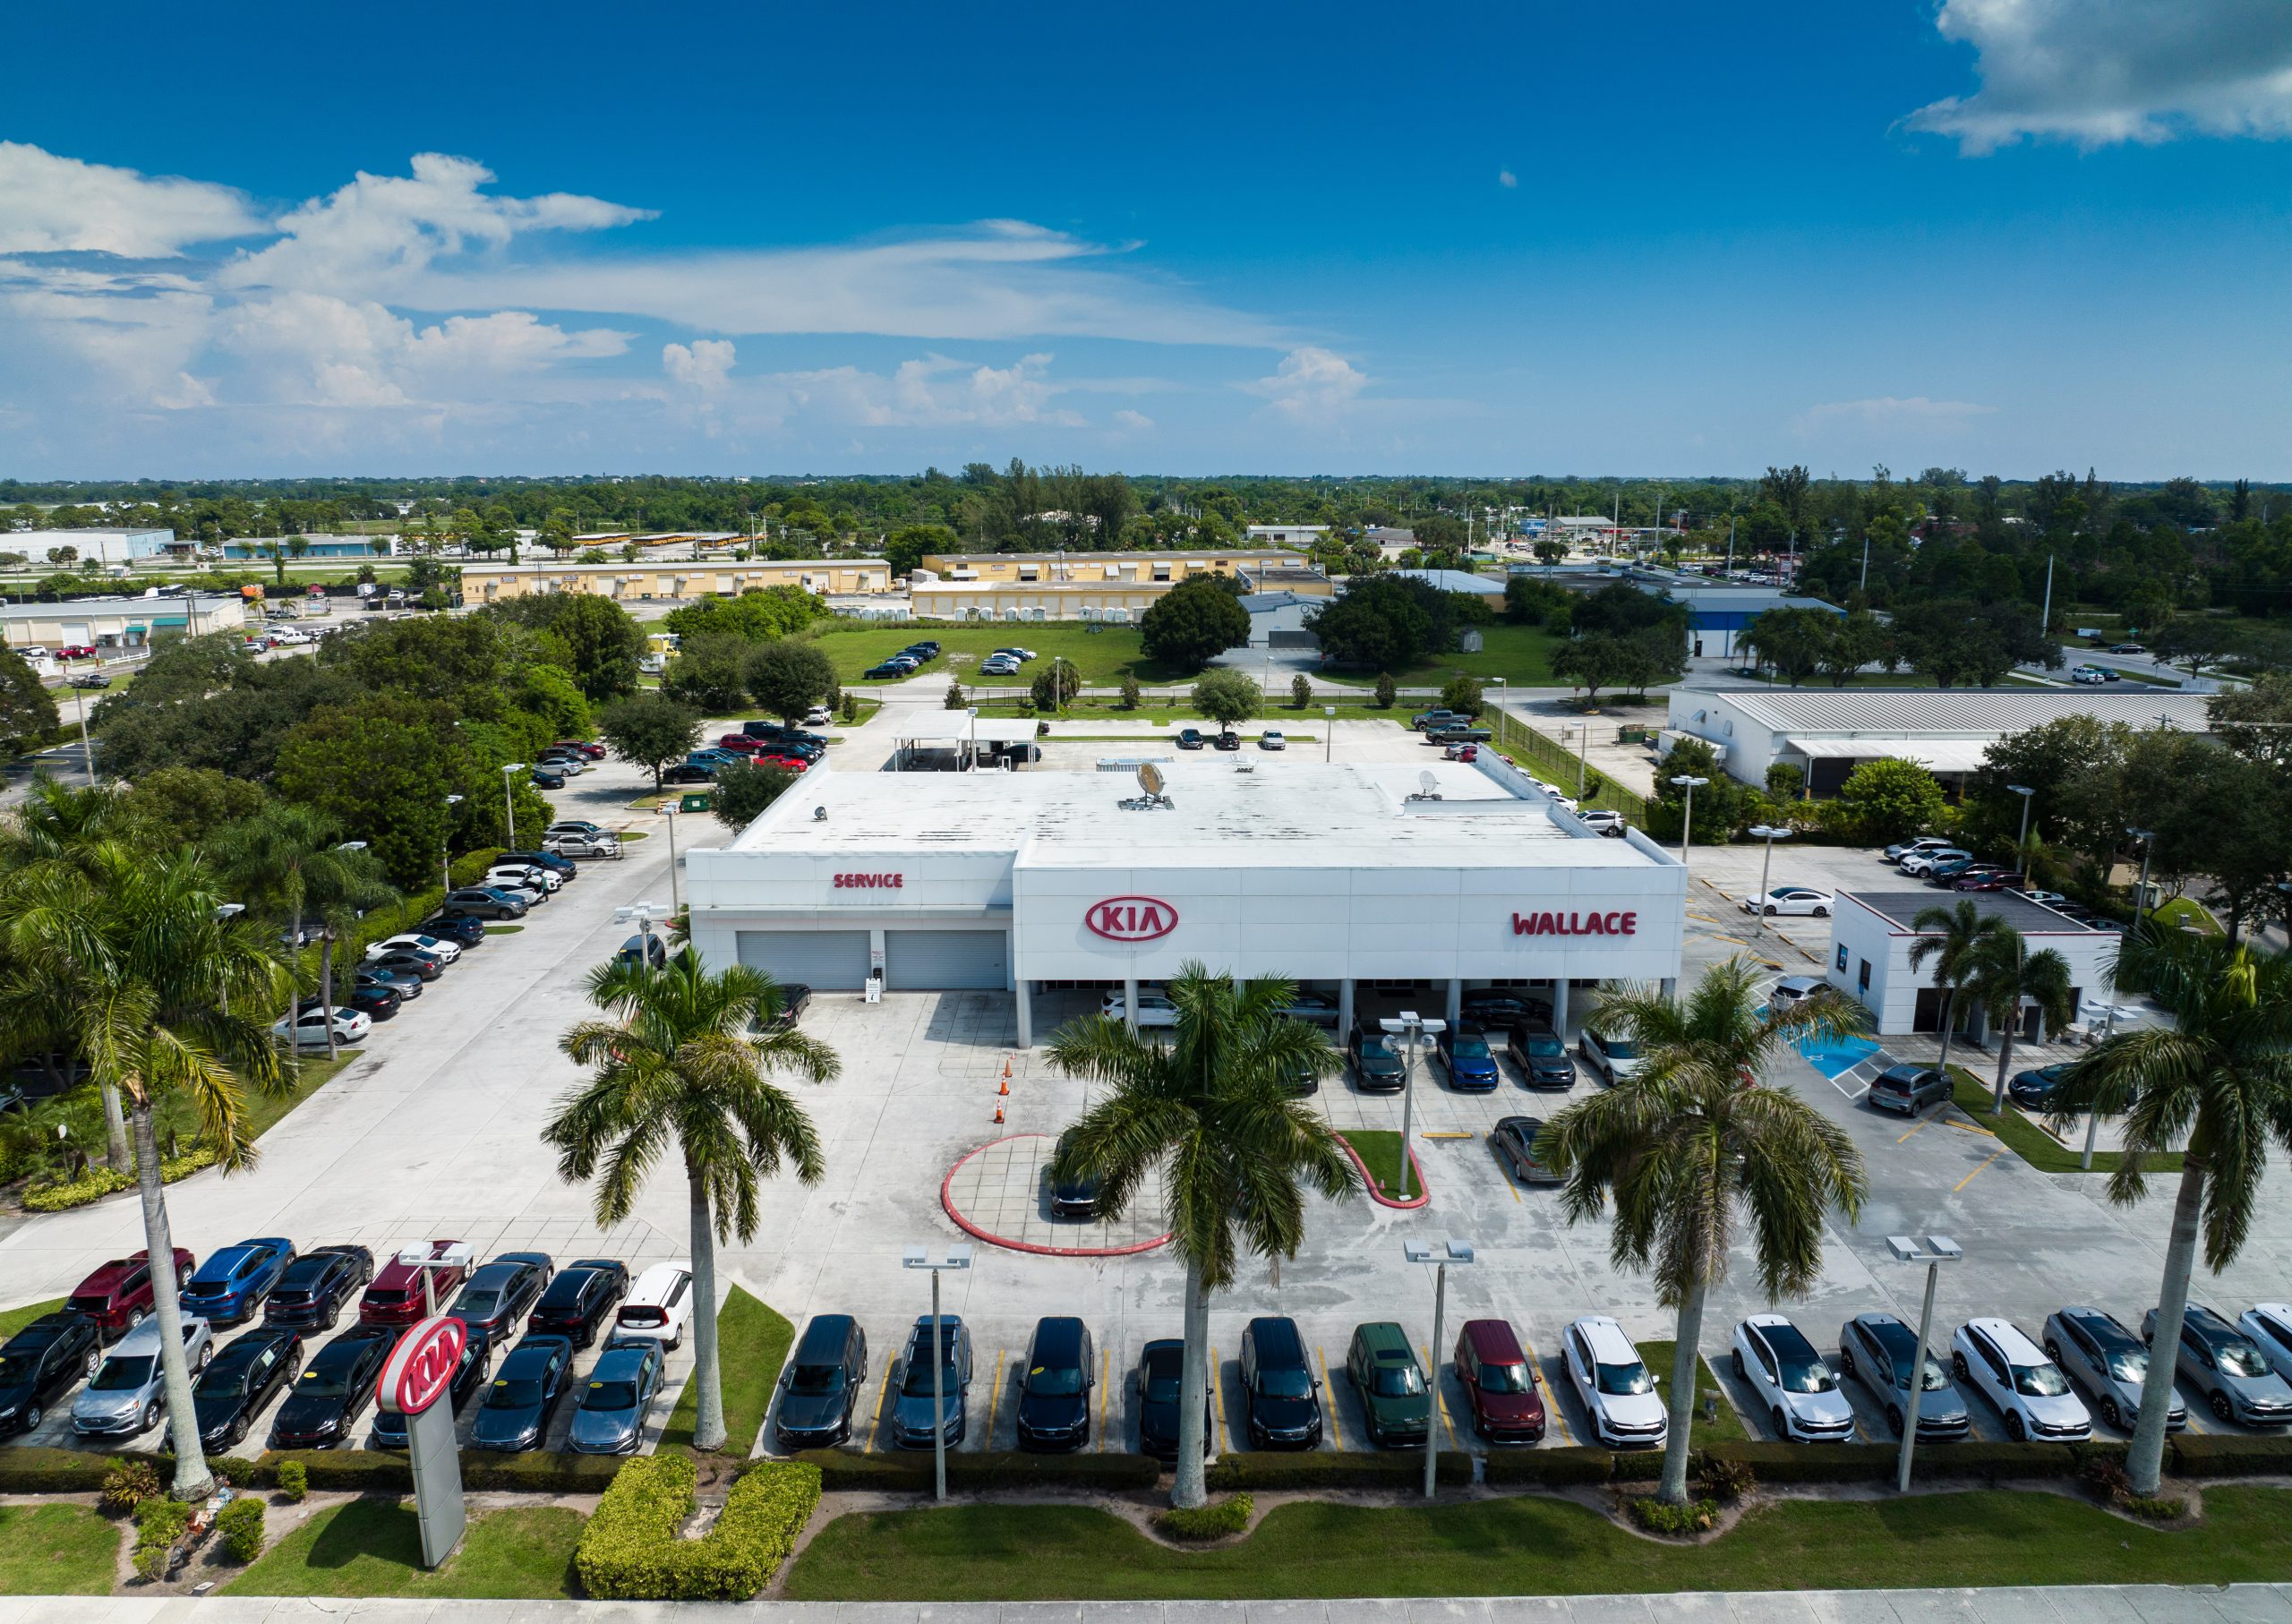 Wallace Kia Dealership Aerial View In Stuart, FL